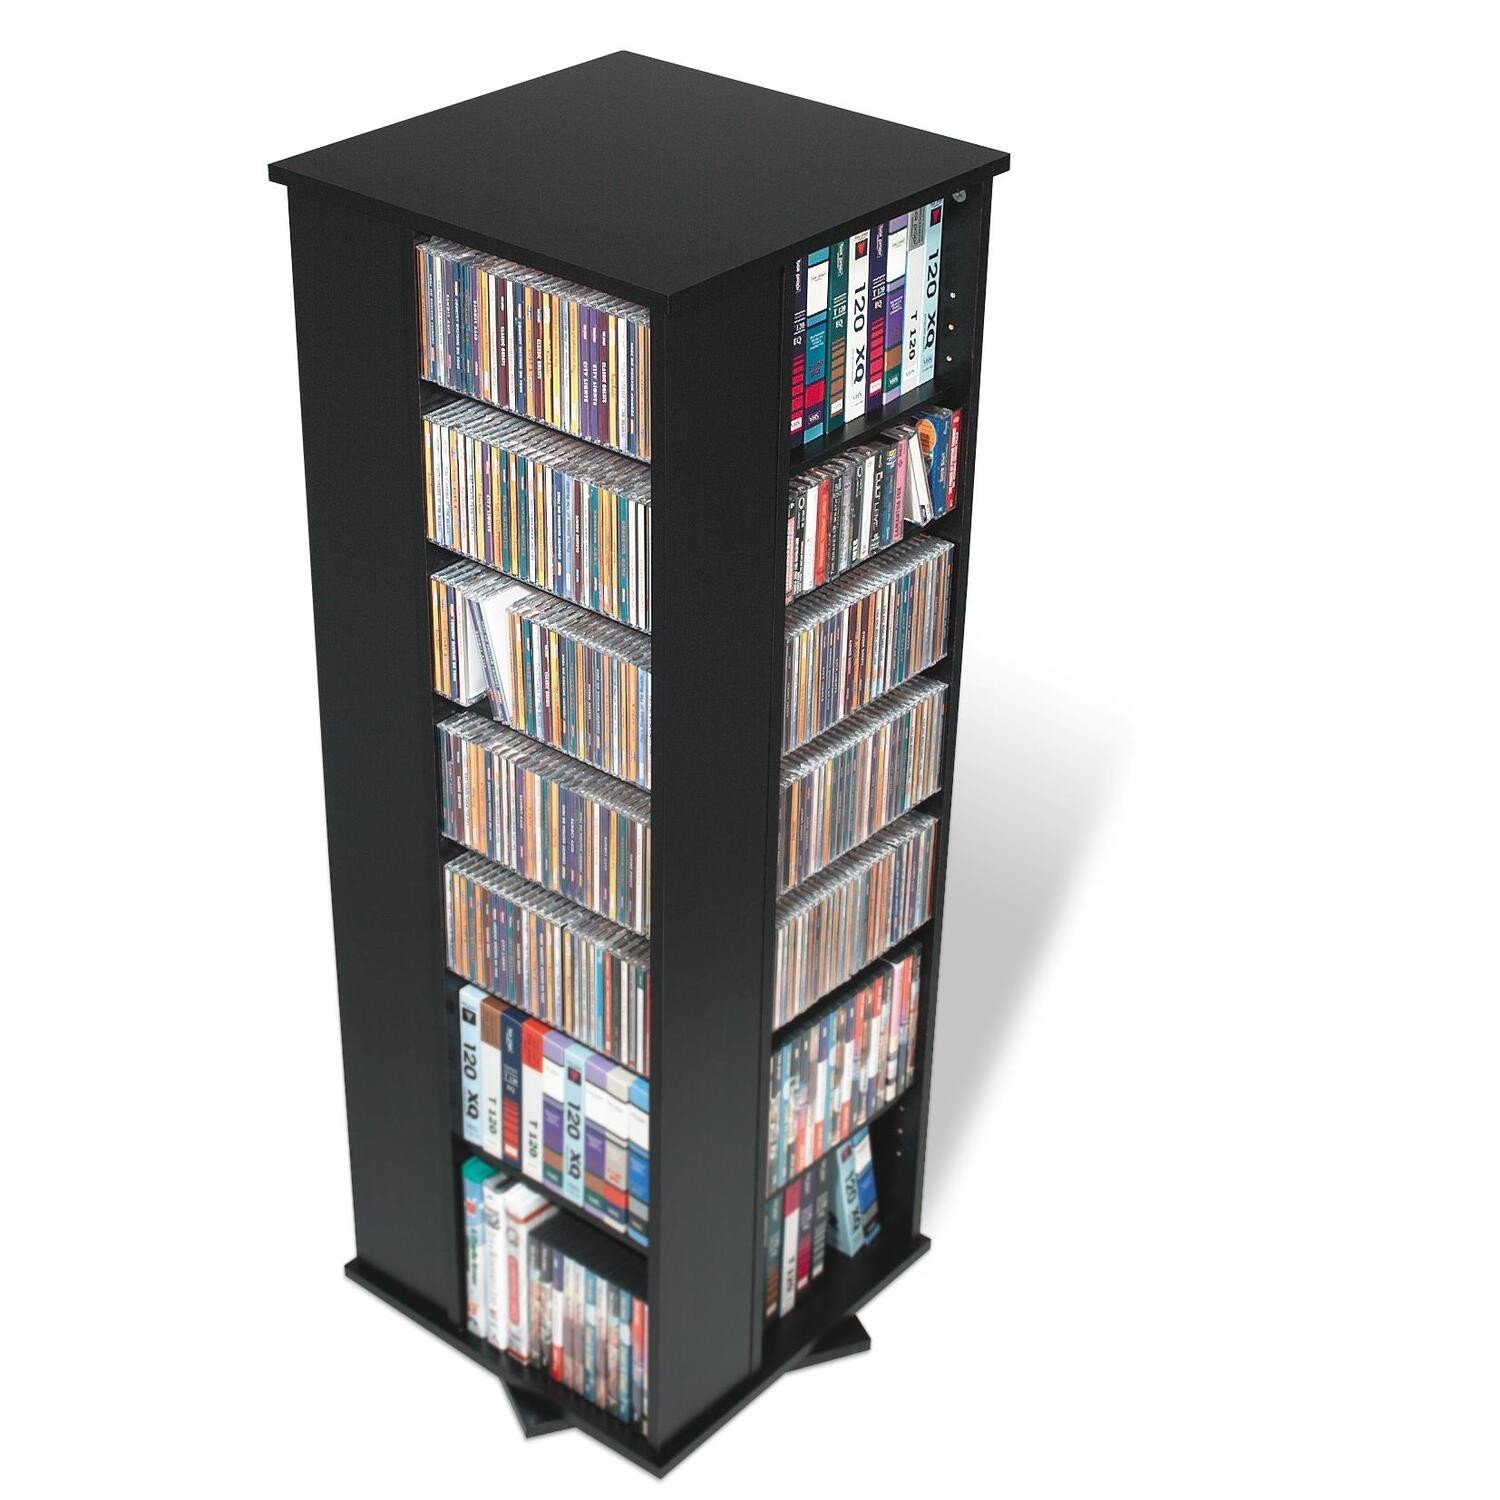 Prepac Black 4-Sided Spinning Media (DVD,CD,Games) Storage Tower